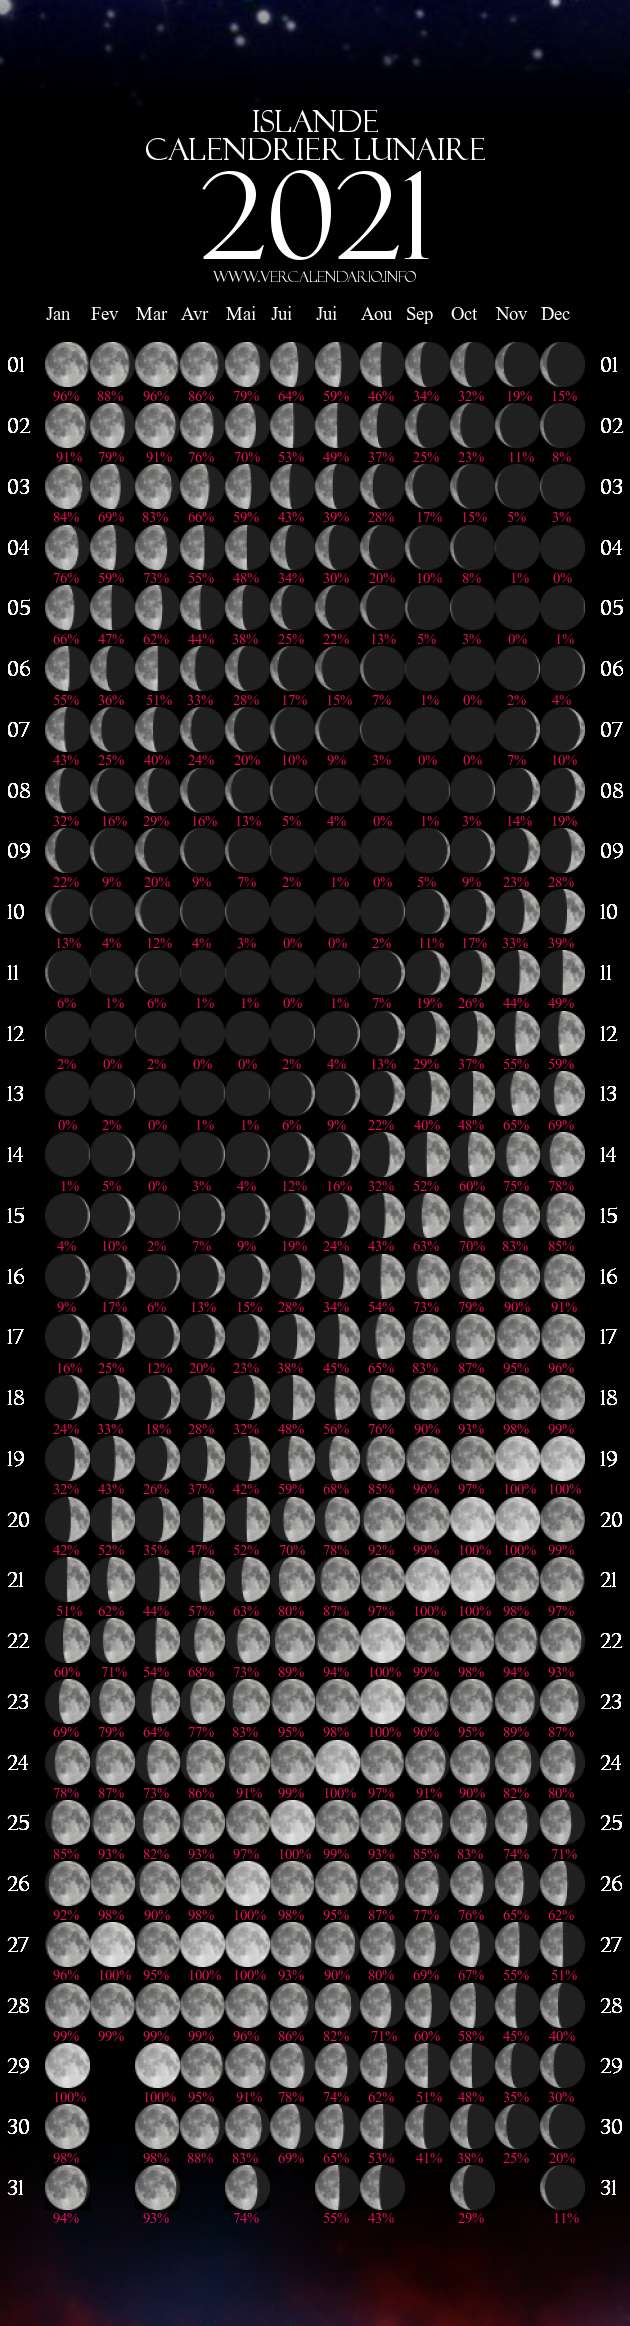 Calendrier Lune Avril 2021 Année Lunaire 2021 (Islande)